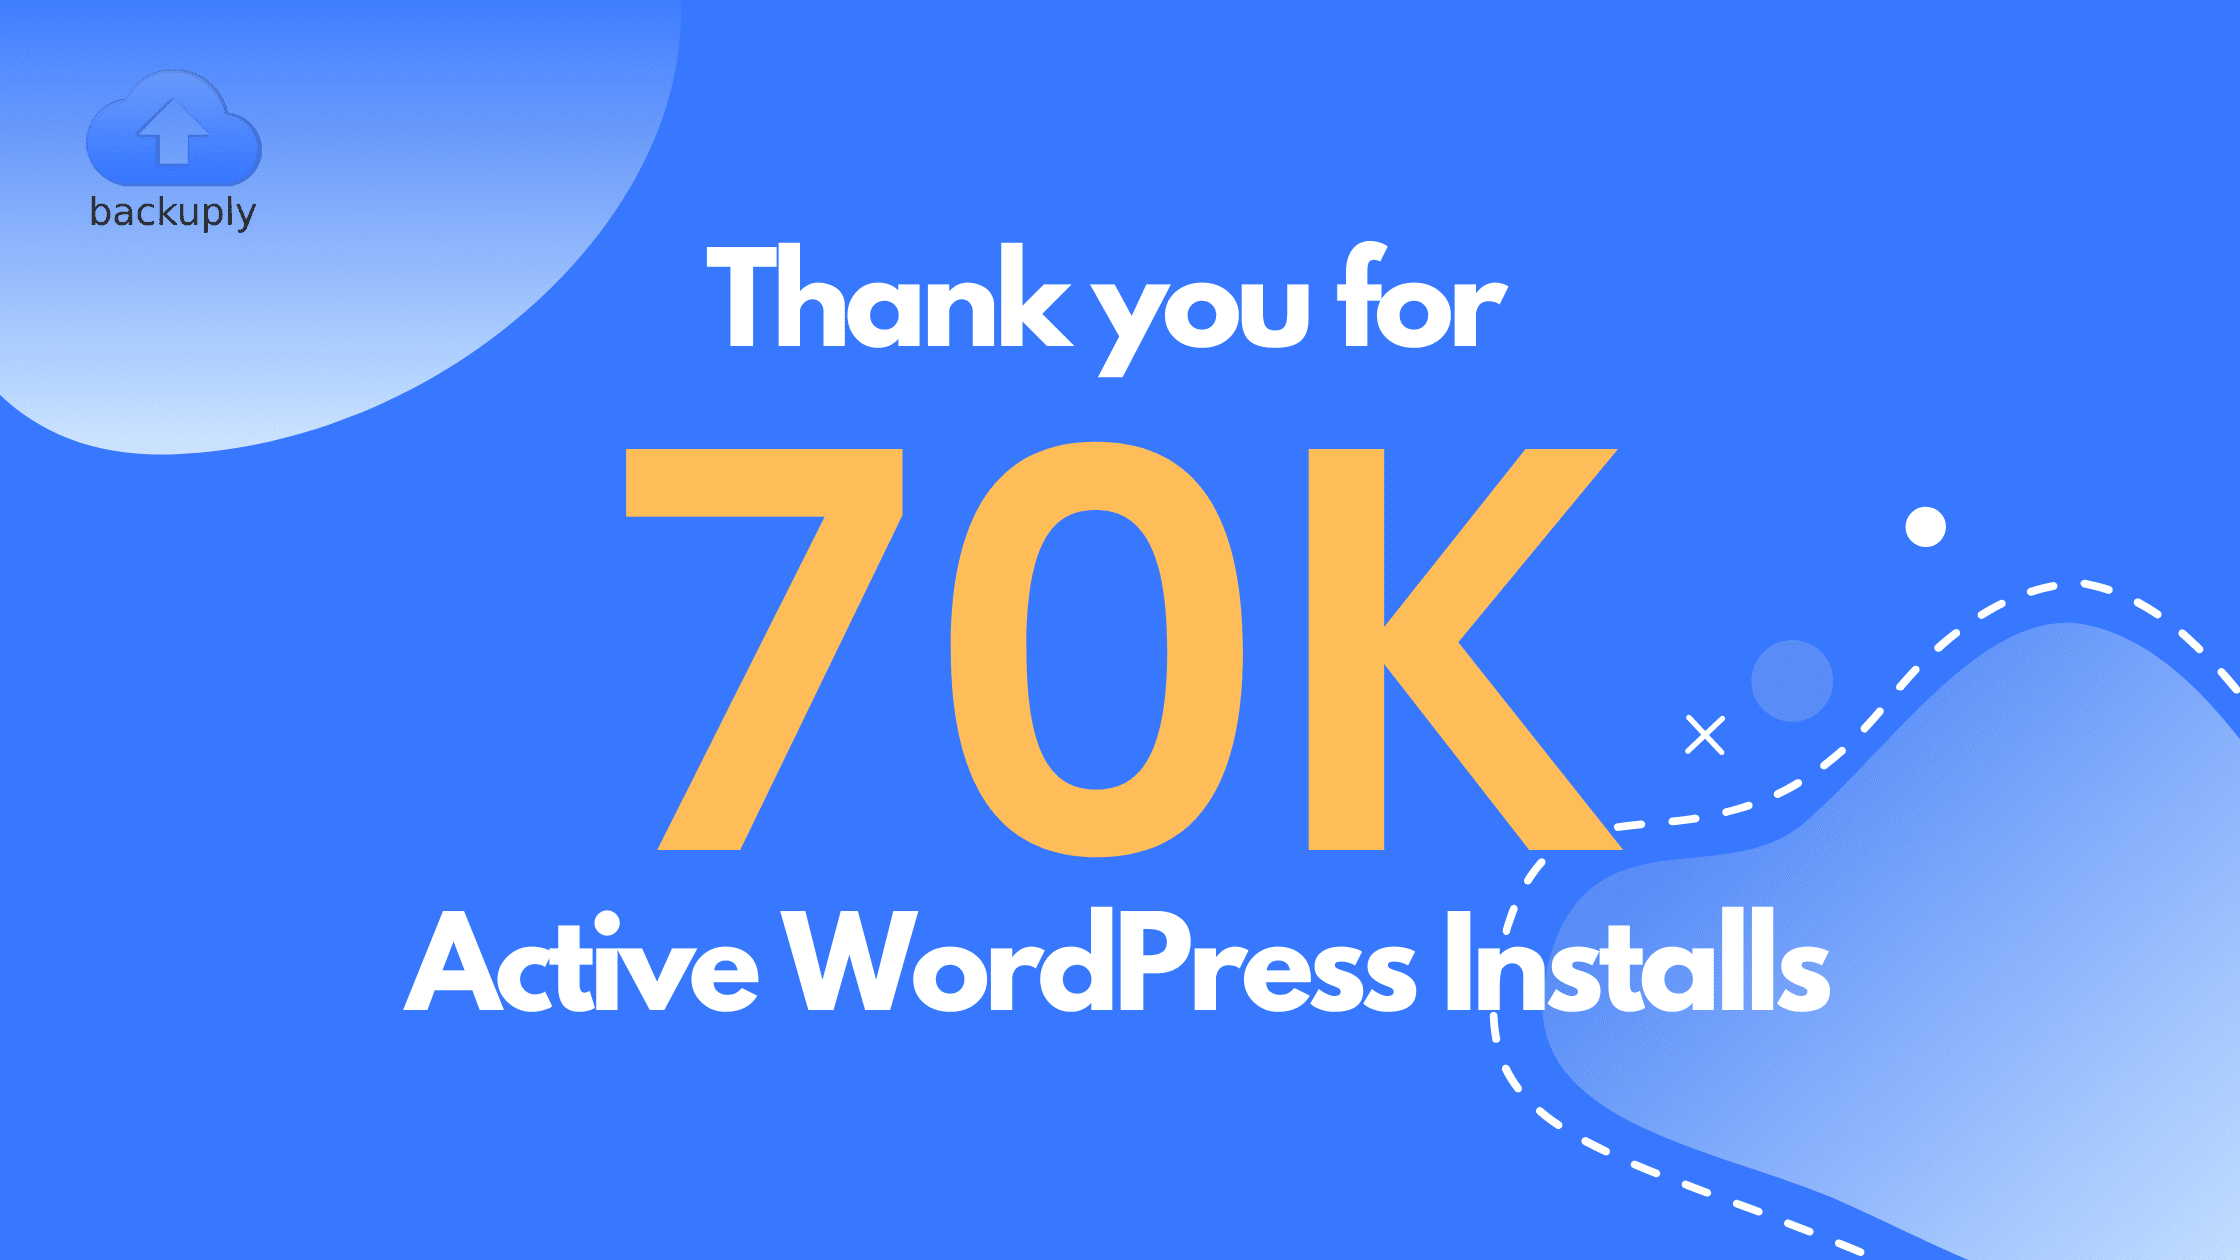 Backuply Crossed 70k Active WordPress Installs